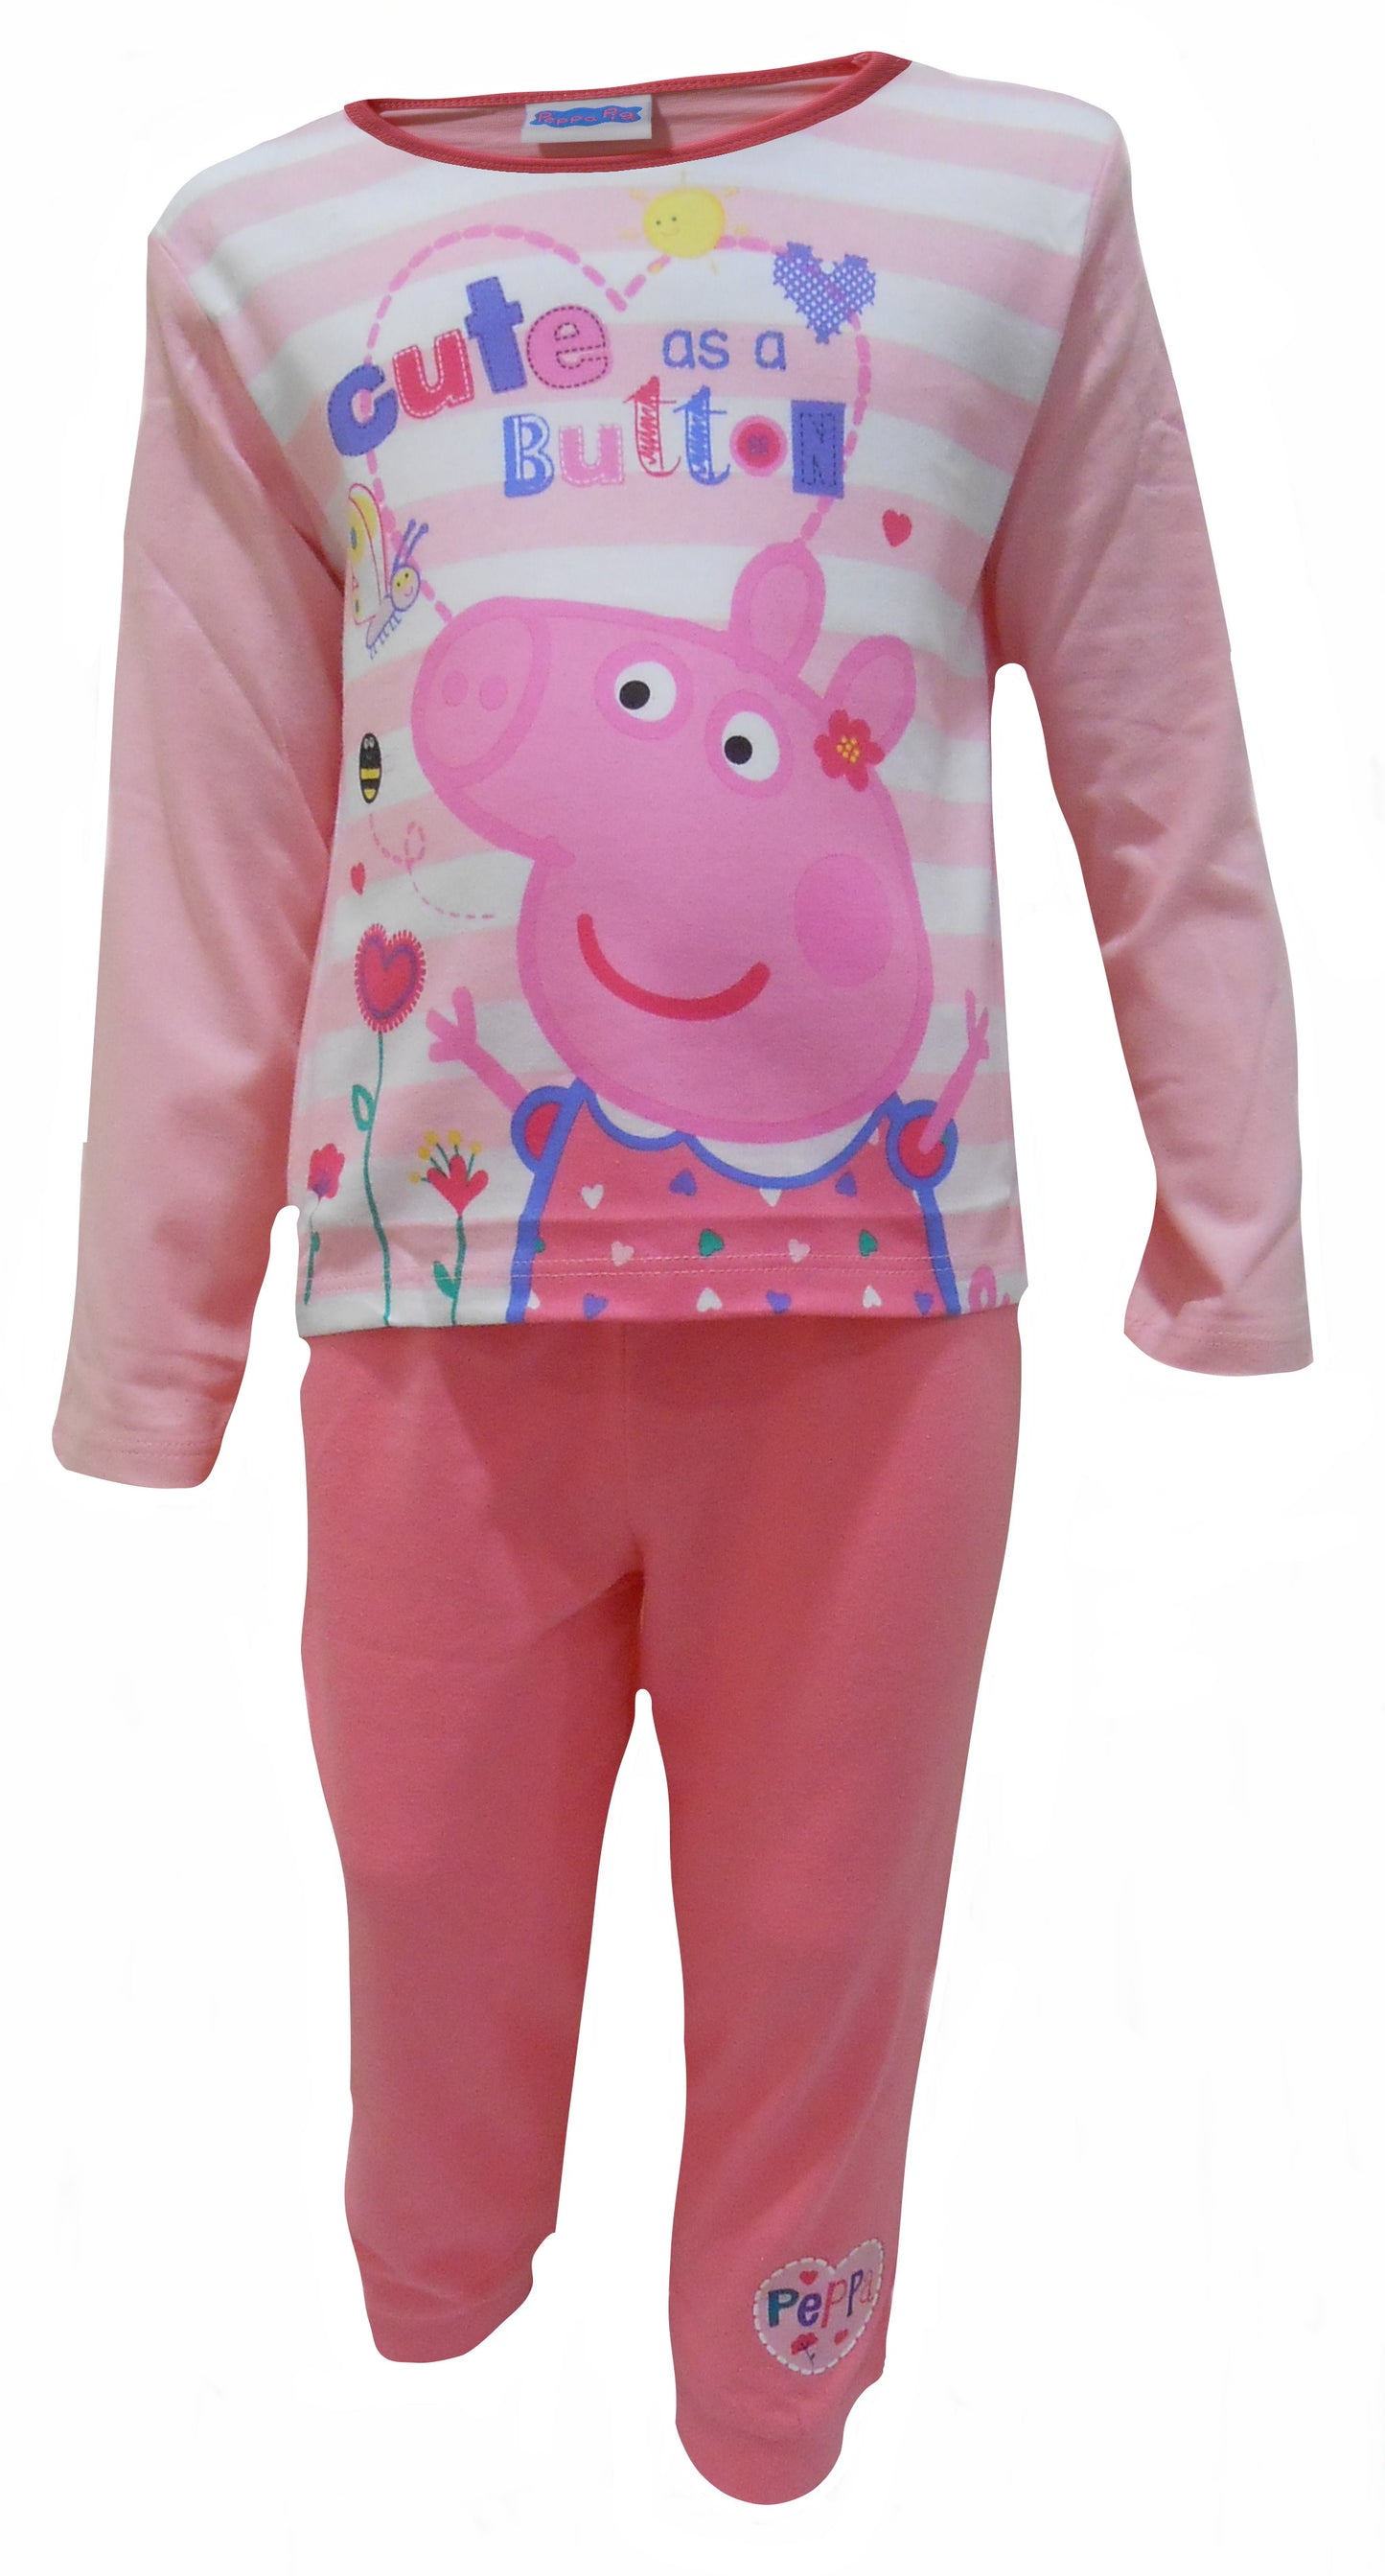 Thingimijigs Peppa Pig Cute as a Button Girls Pyjamas 18-24 Months Pink